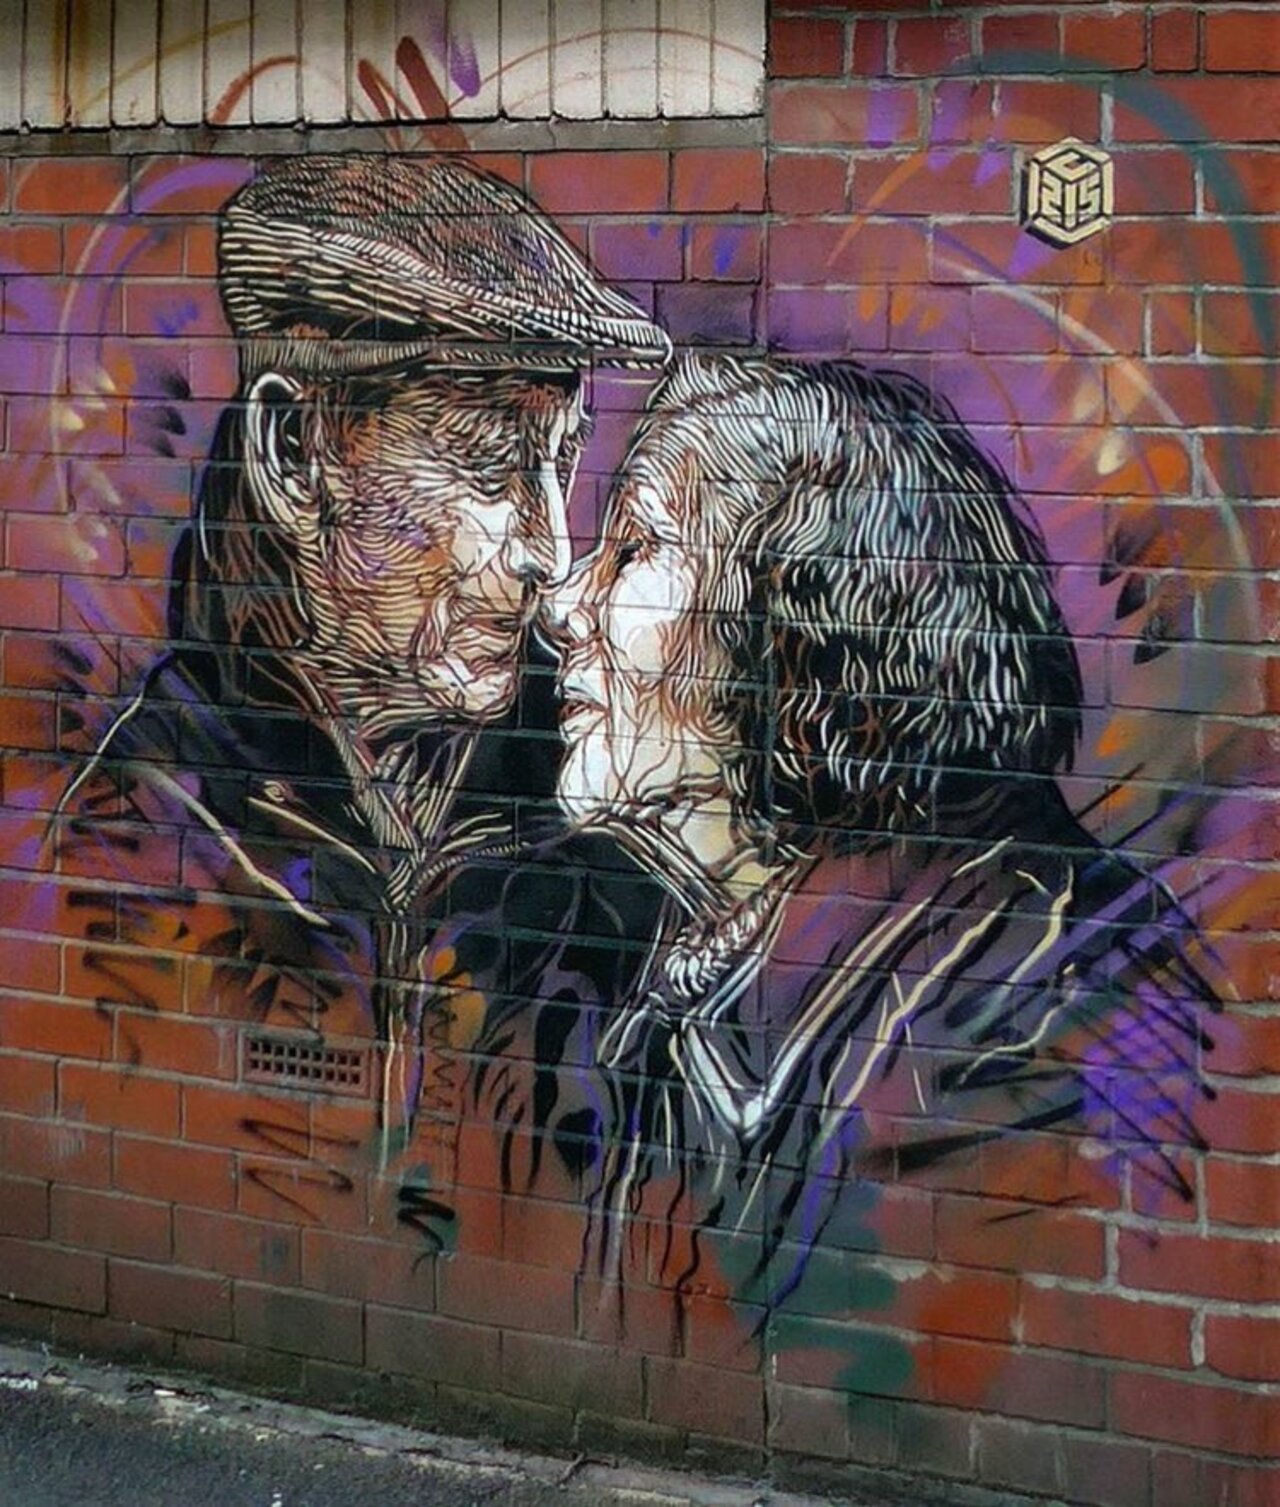 New Street Art by Christian Guémy found in Manchester, UK #art #mural #graffiti #streetart https://t.co/QVW4q2VqEq